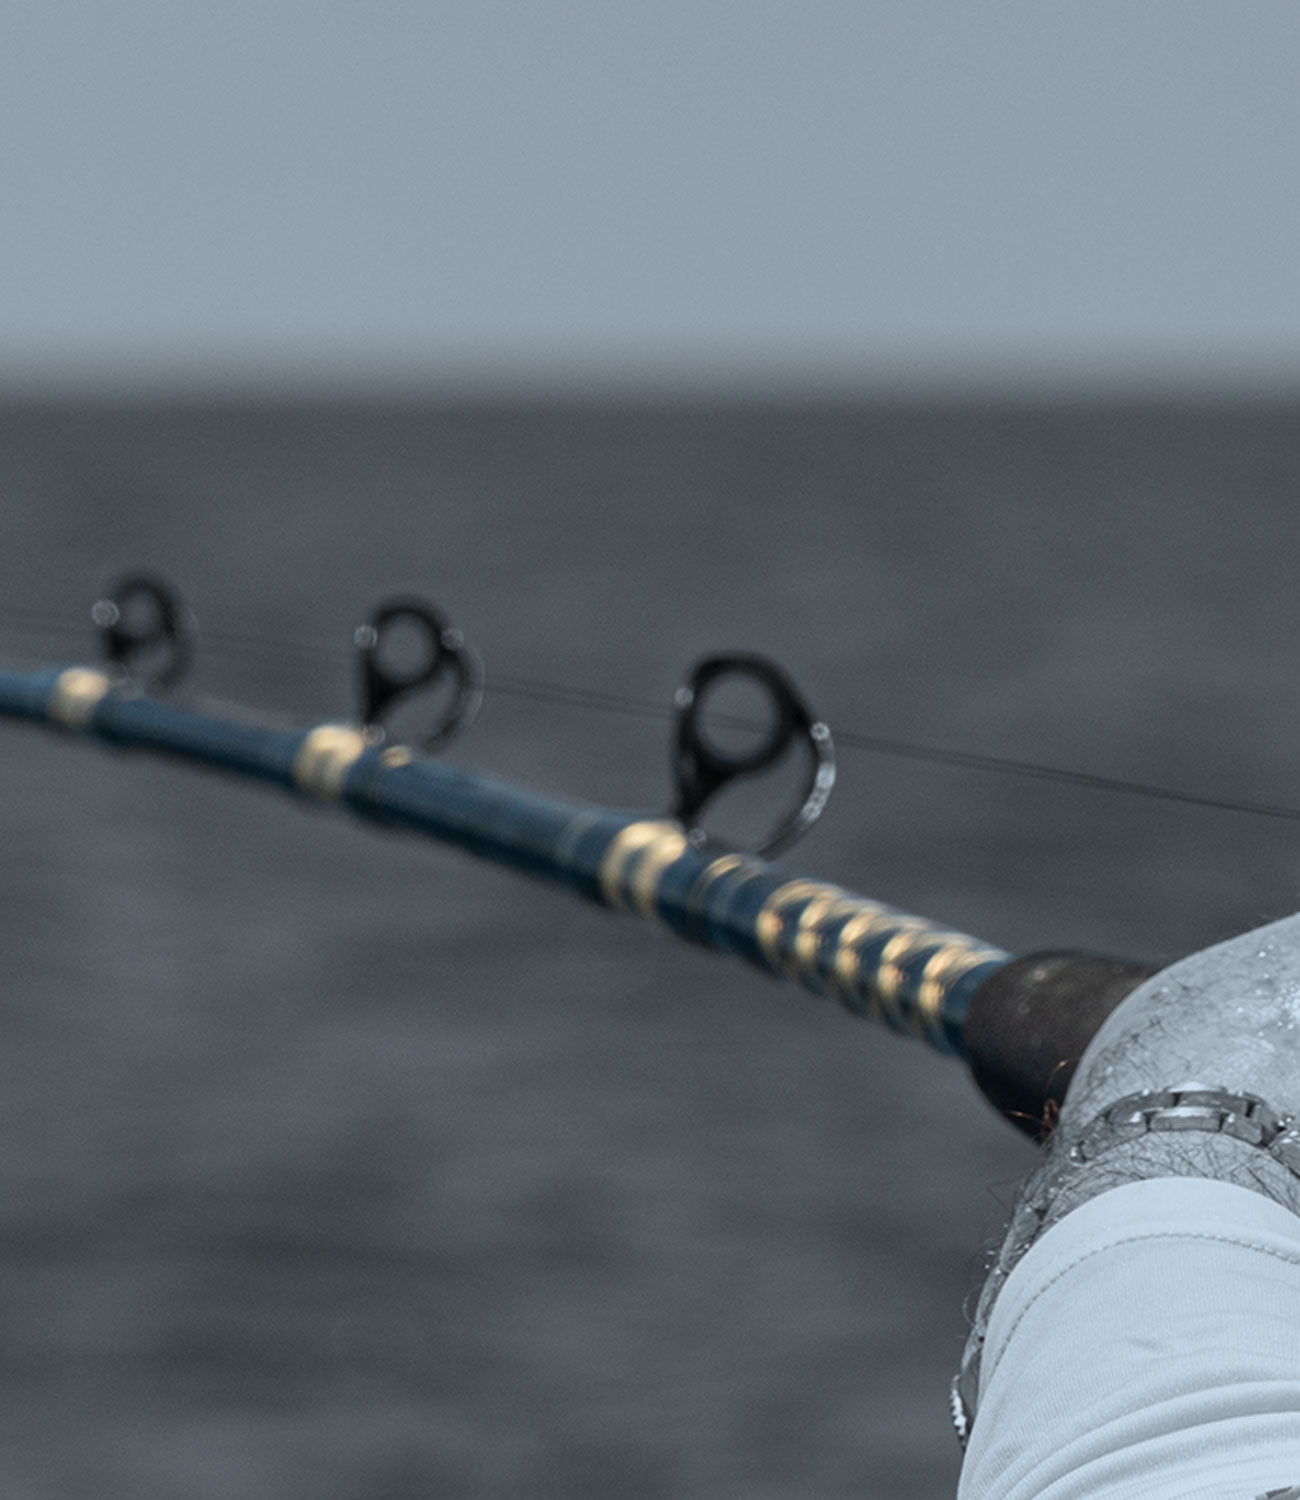 80pcs/box Fishing Rod Guides Tips Eye Sea Fishing Pole Line Guide